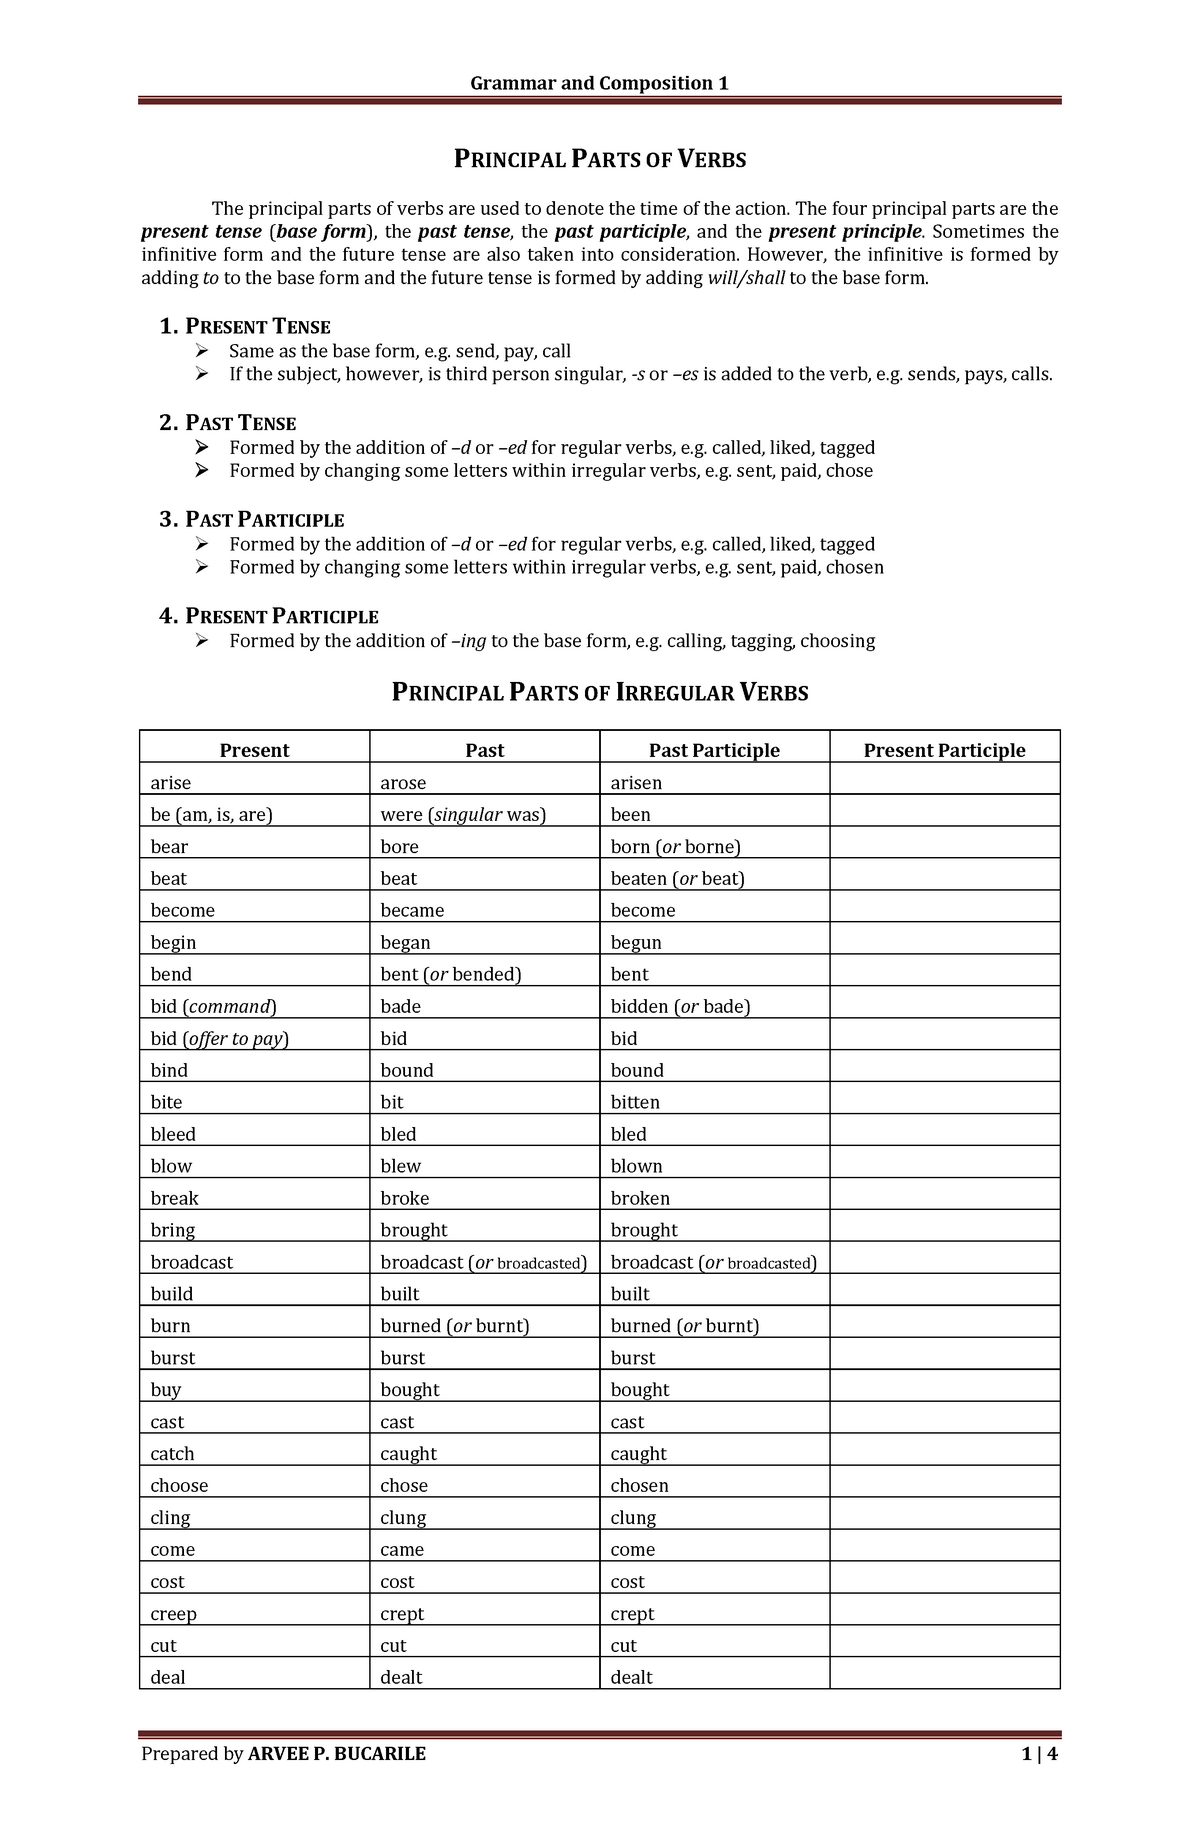 principal-parts-of-verbs-lecture-notes-english-slu-studocu